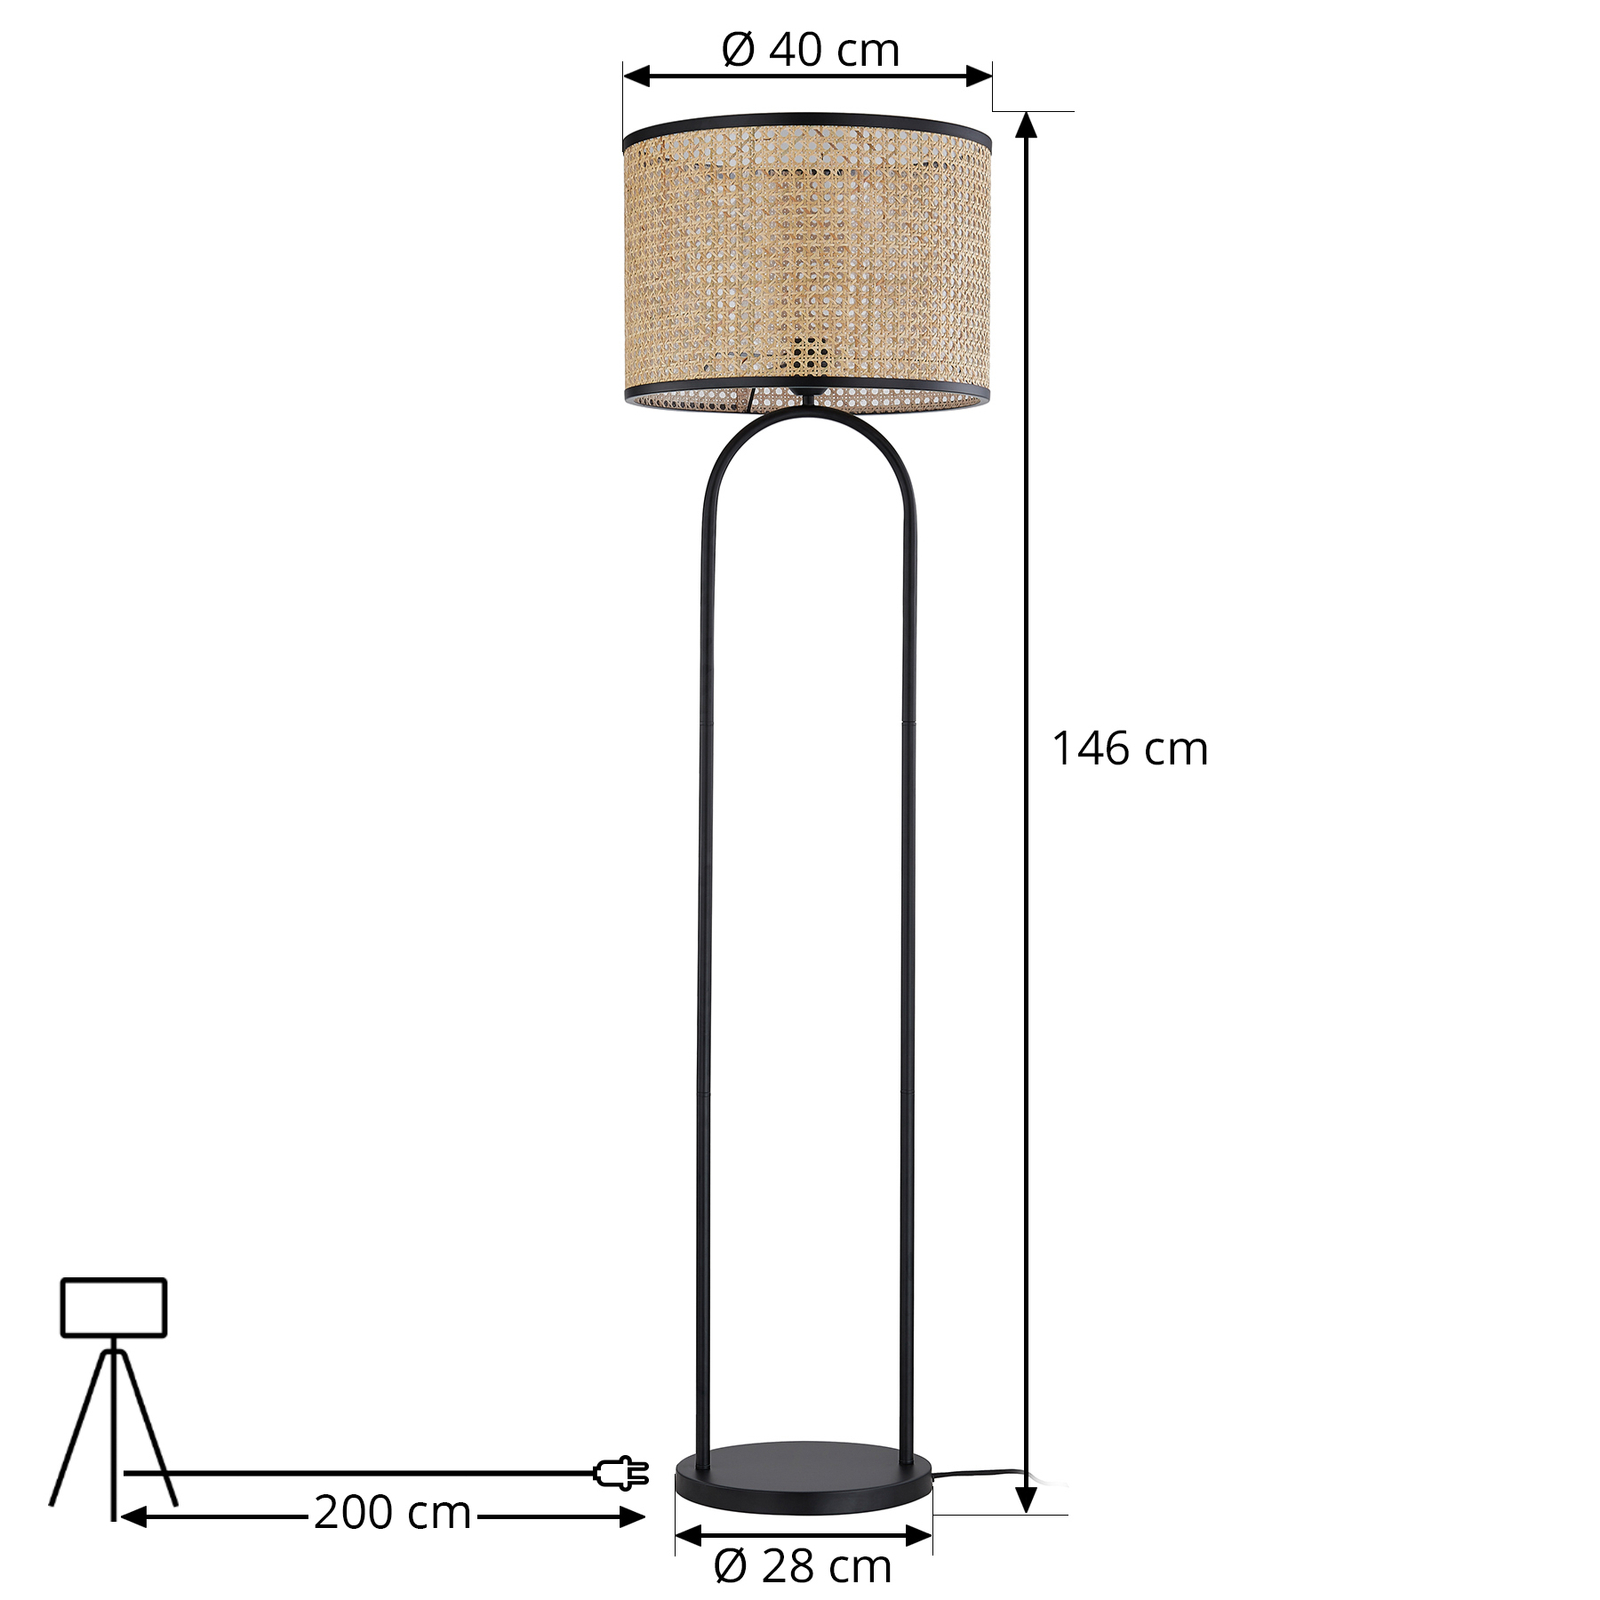 Lindby φωτιστικό δαπέδου Yaelle, ύψος 146 cm, μπαστούνι, μαύρο, E27